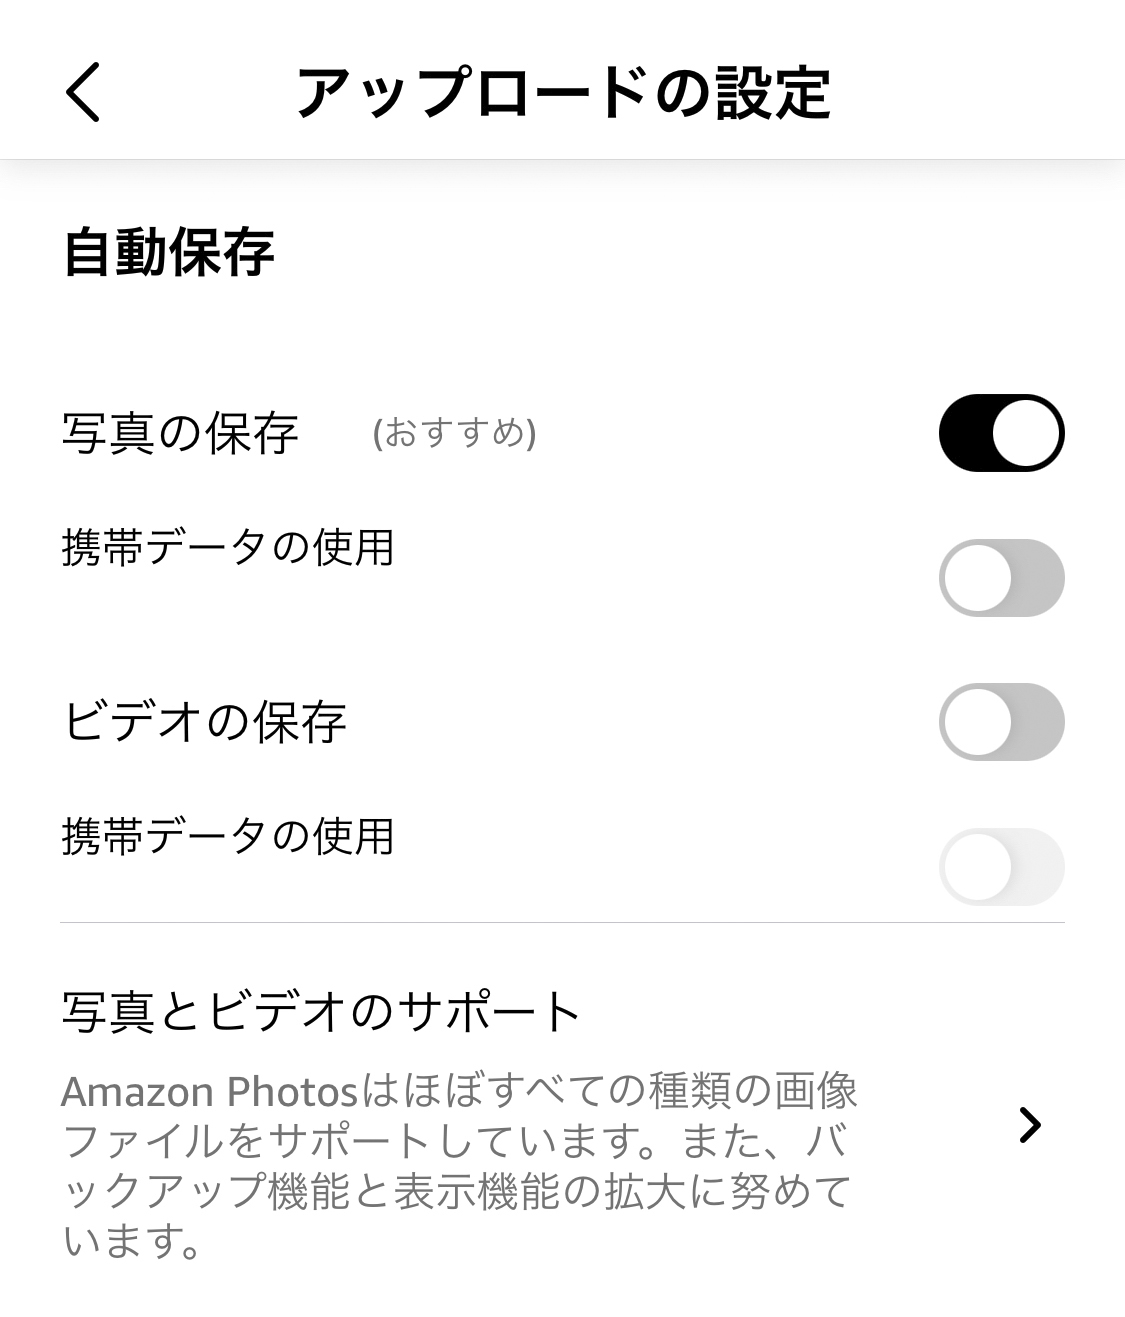 Amazon Photosアップロード設定